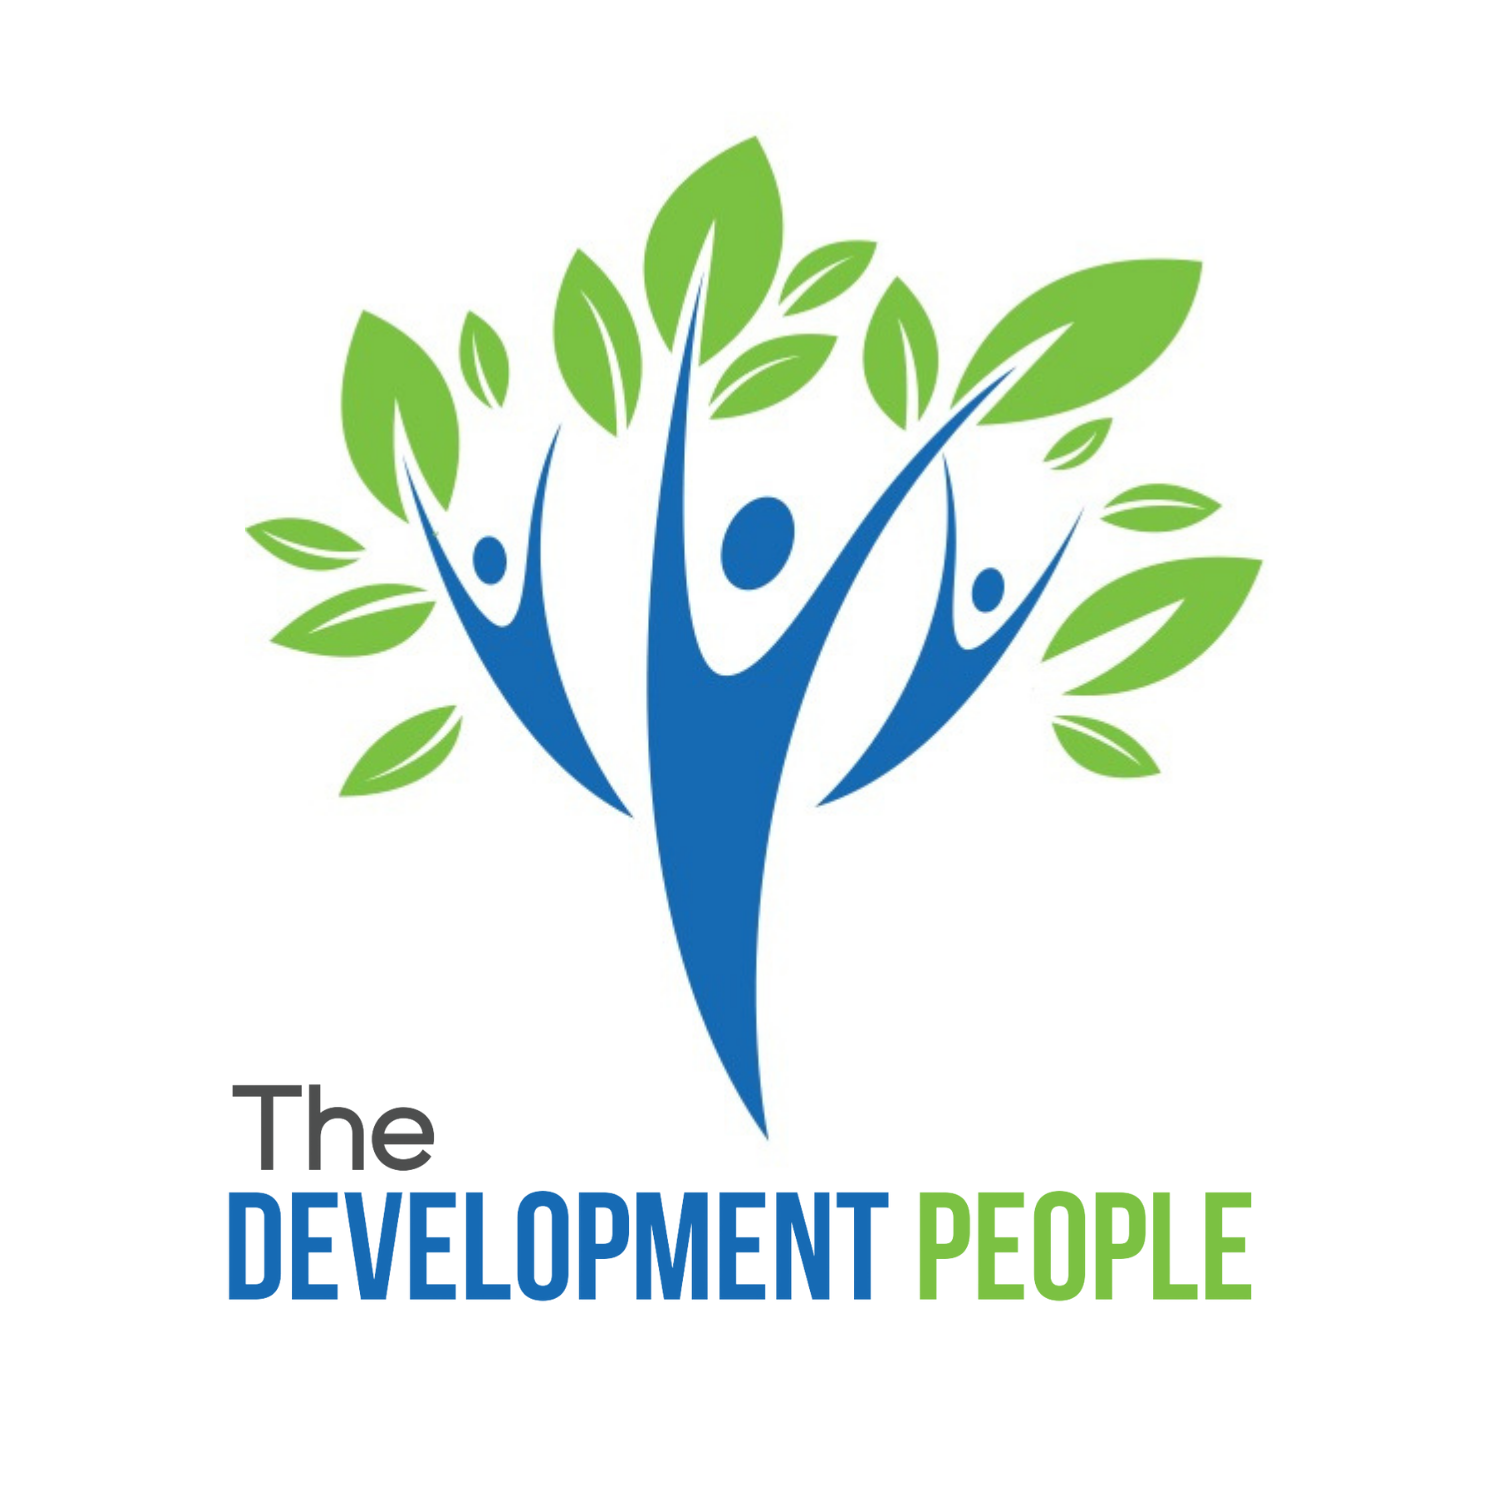 The Development People logo